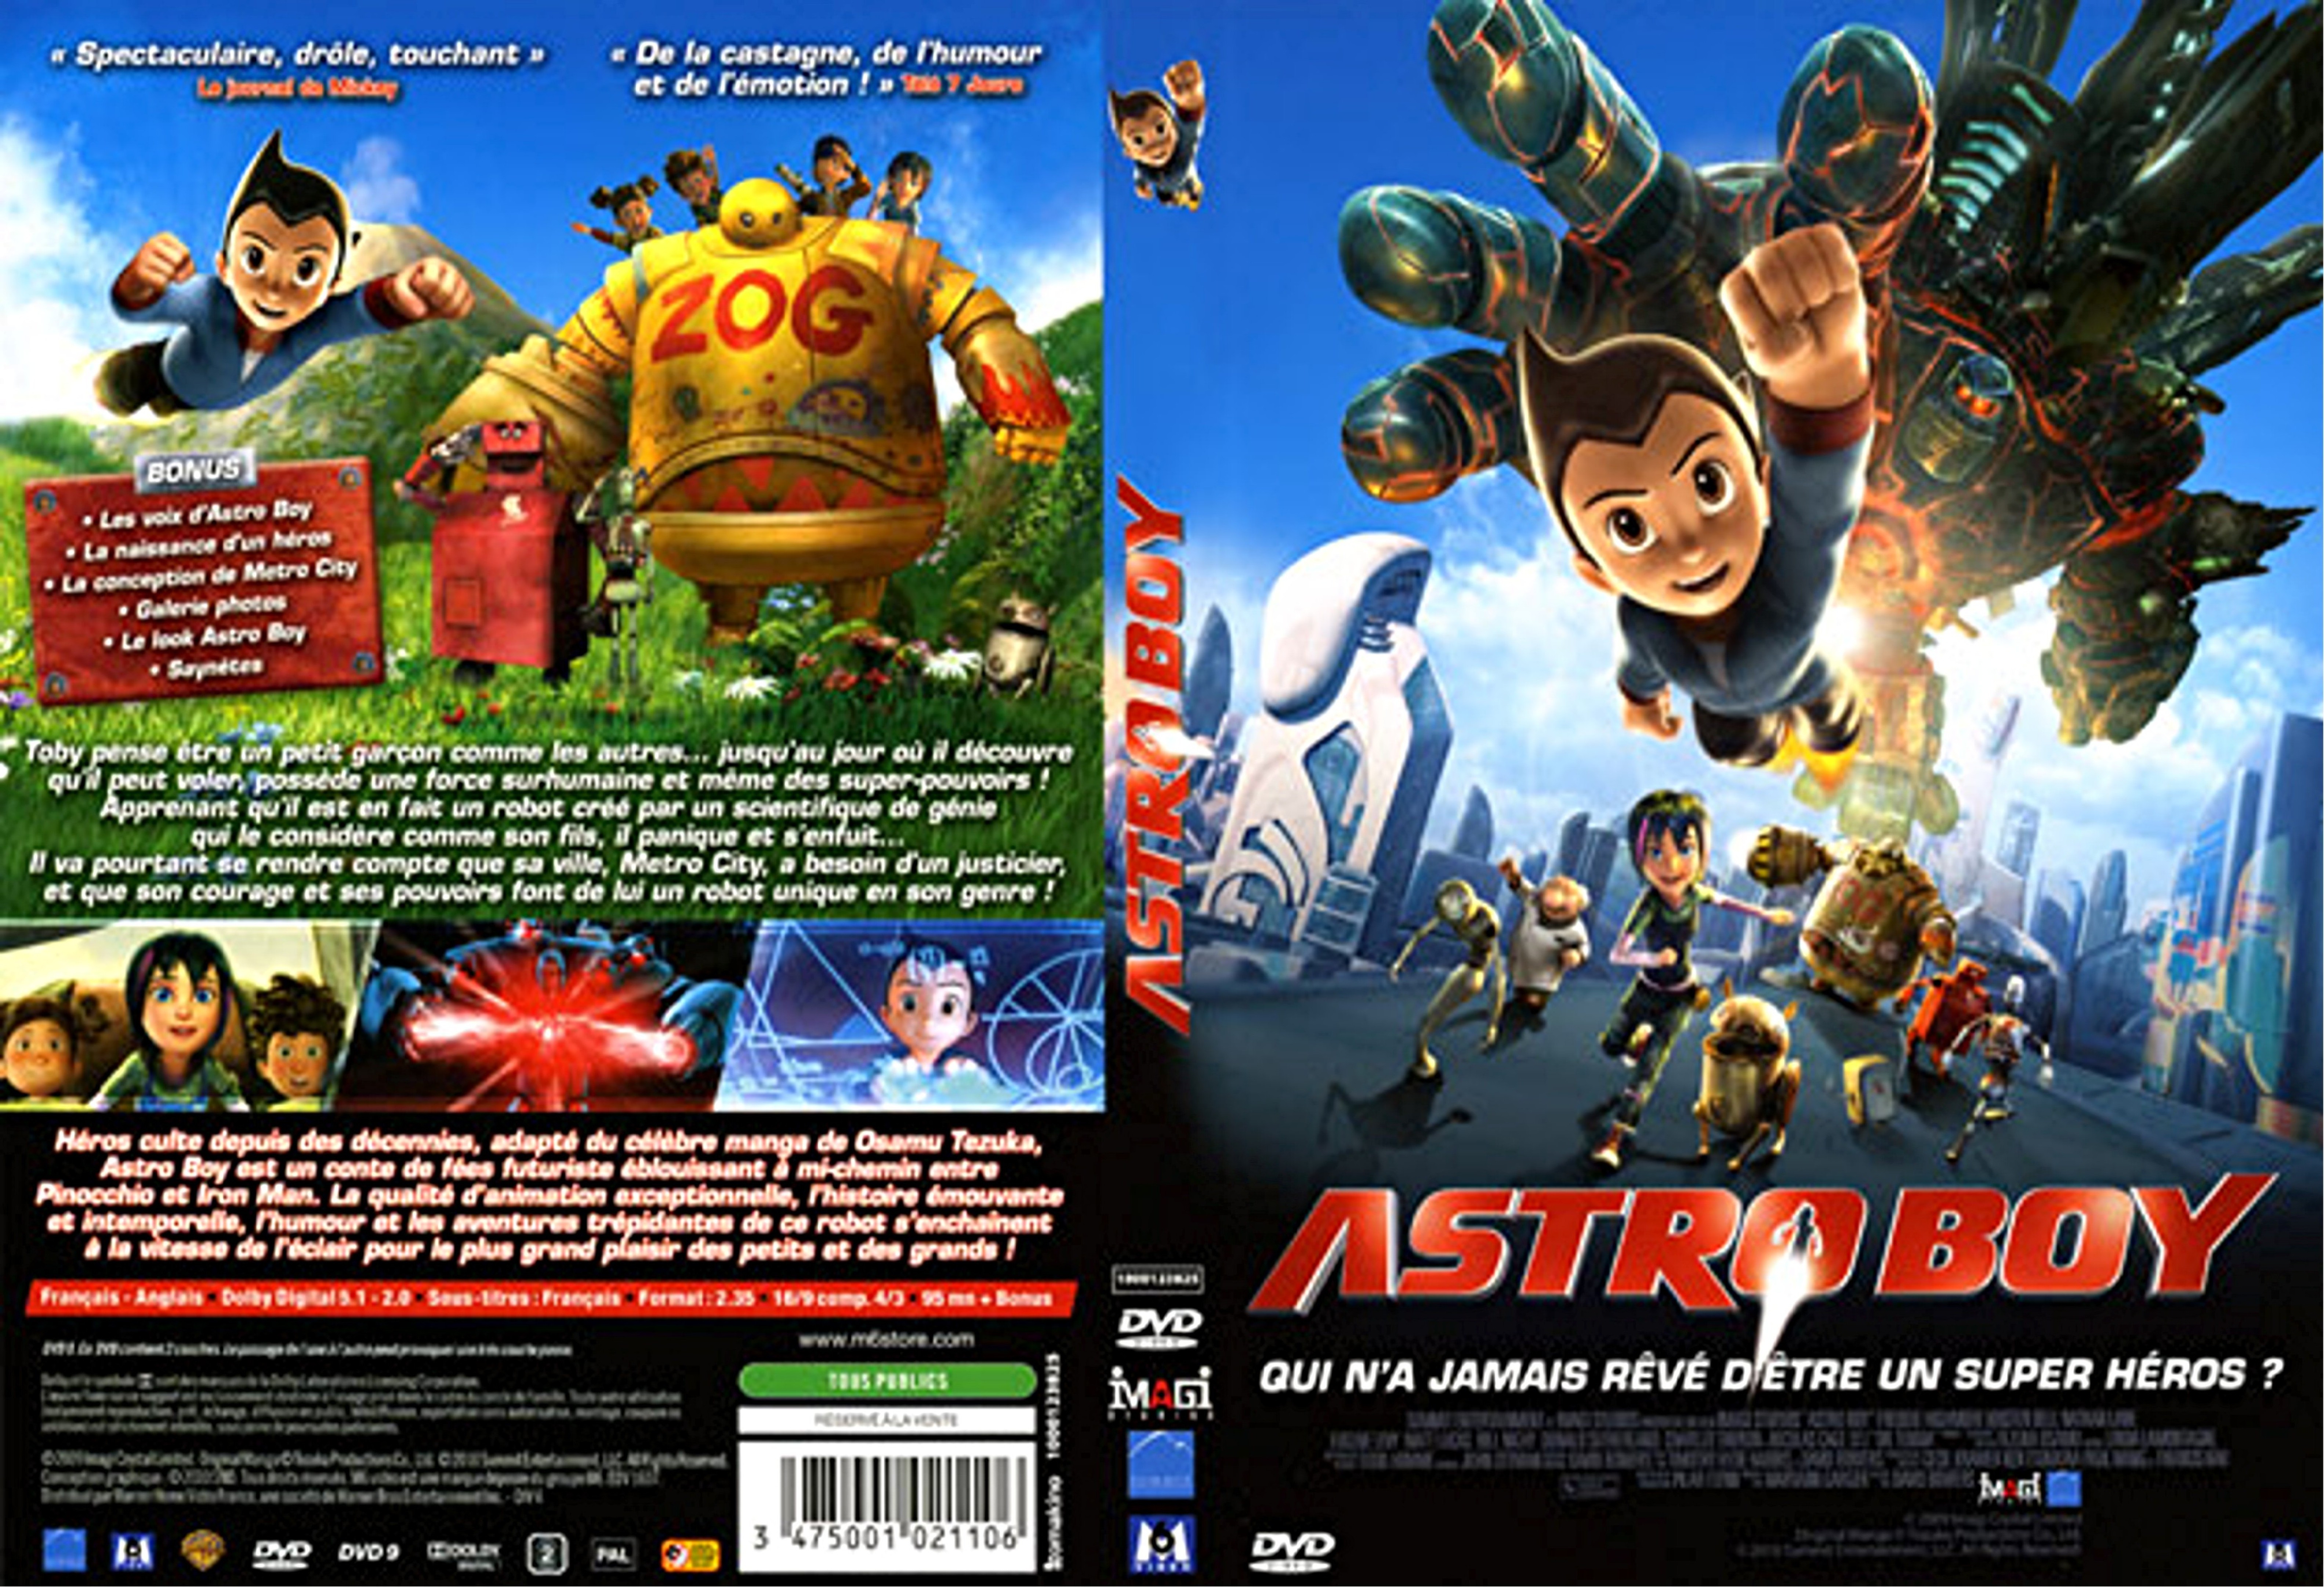 Jaquette DVD Astro boy - SLIM